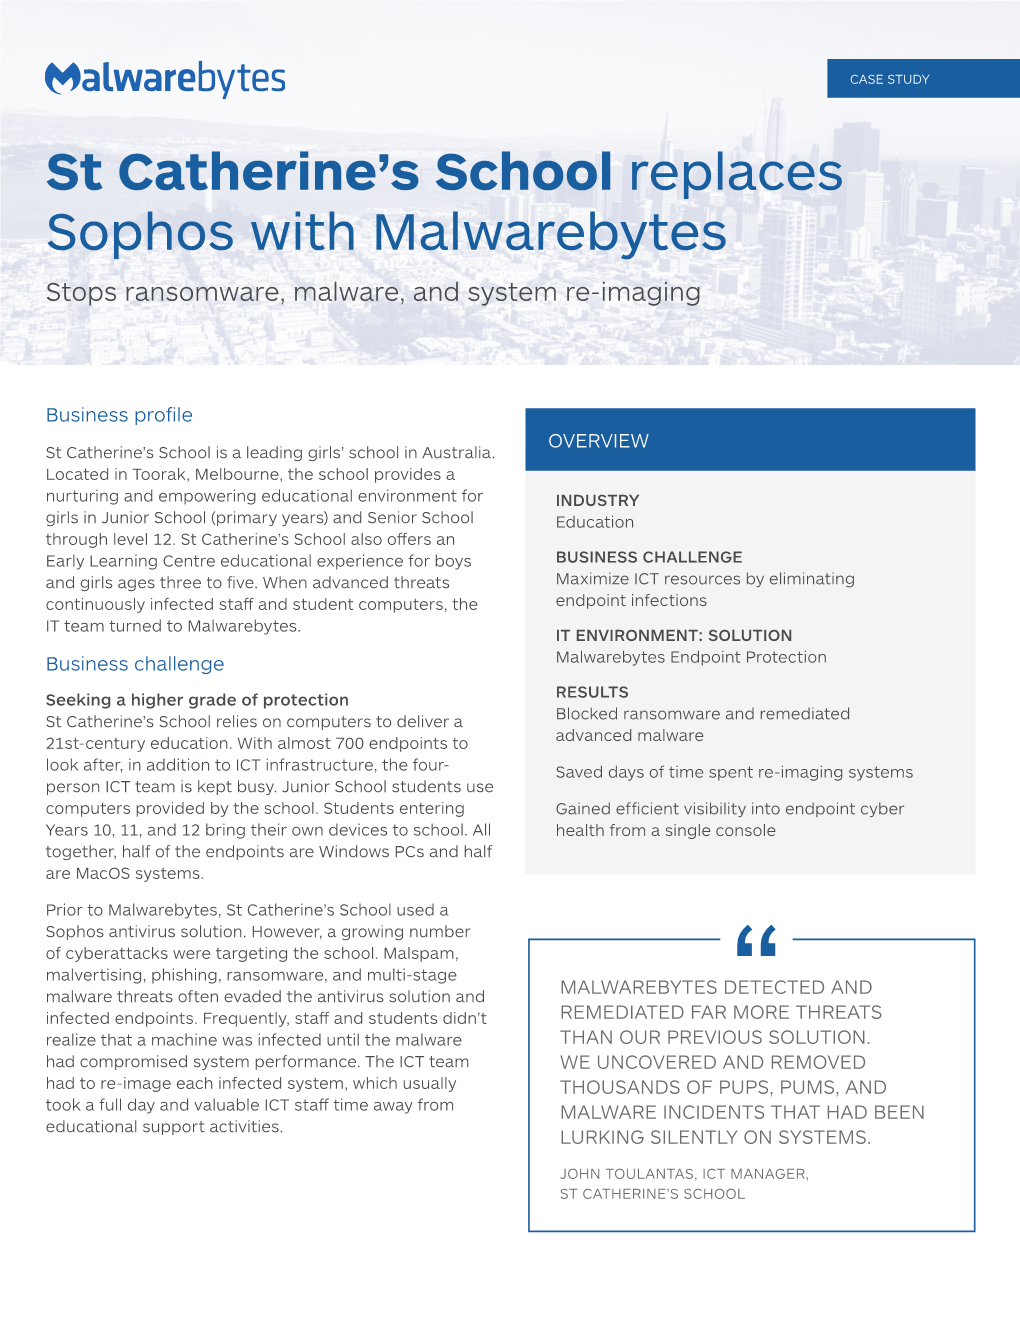 St Catherine's School Replaces Sophos with Malwarebytes